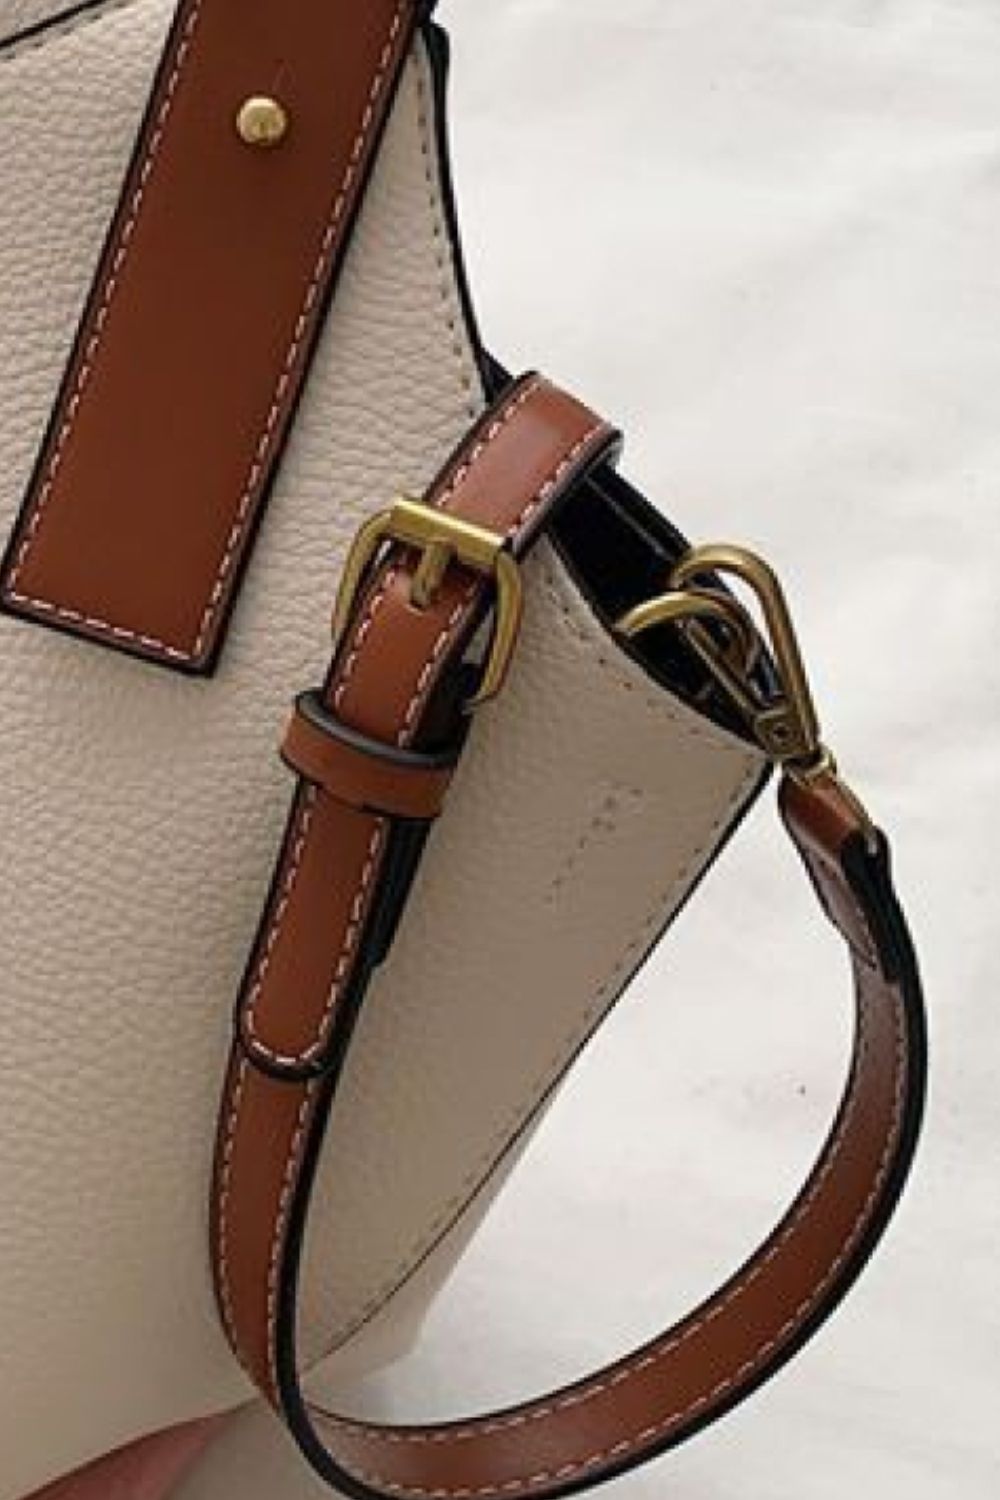 Fashion PU Leather Bucket Bag